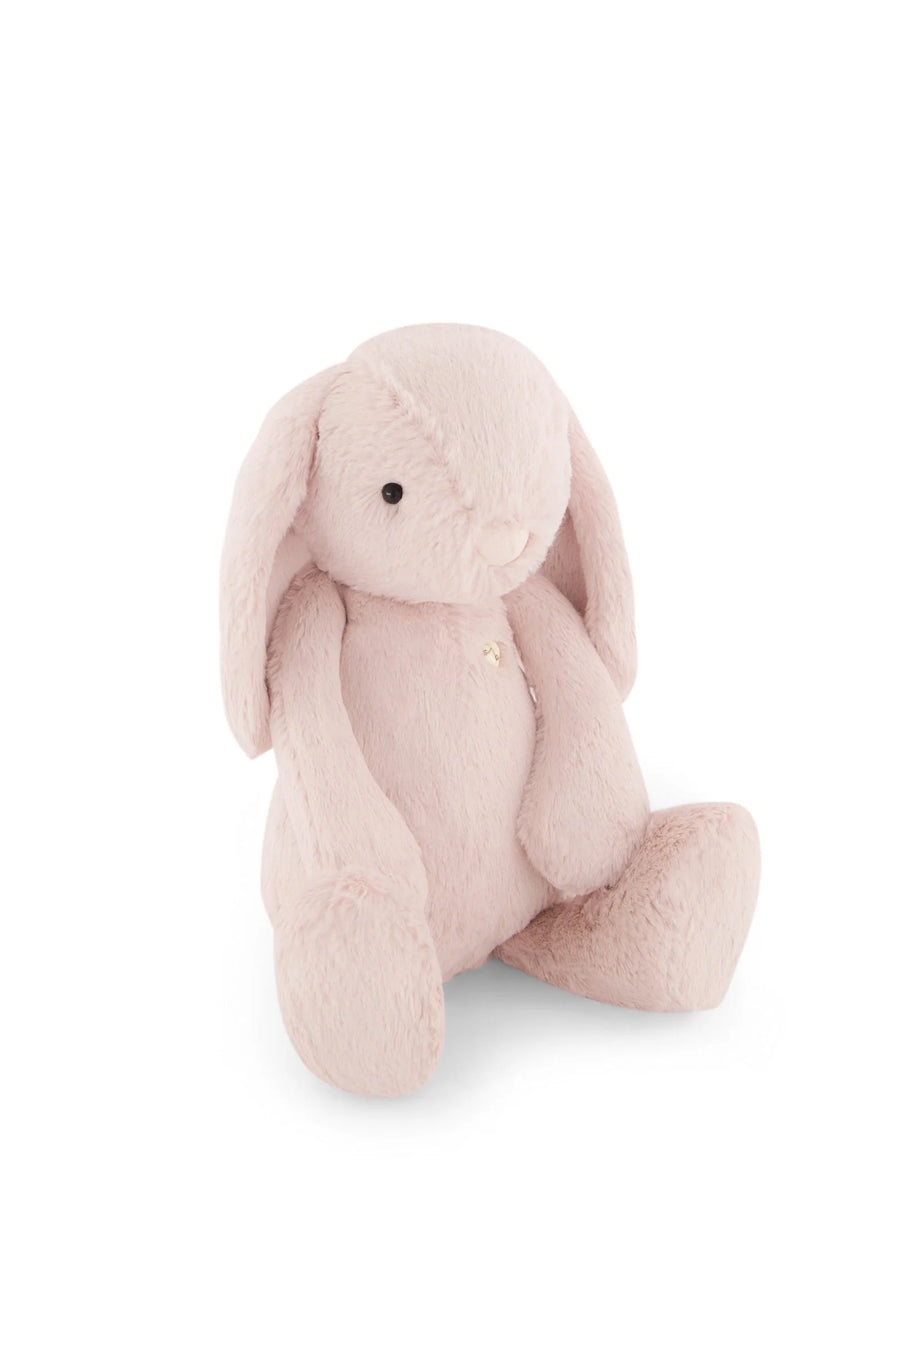 Snuggle Bunny - Penelope - Blush - 30cm